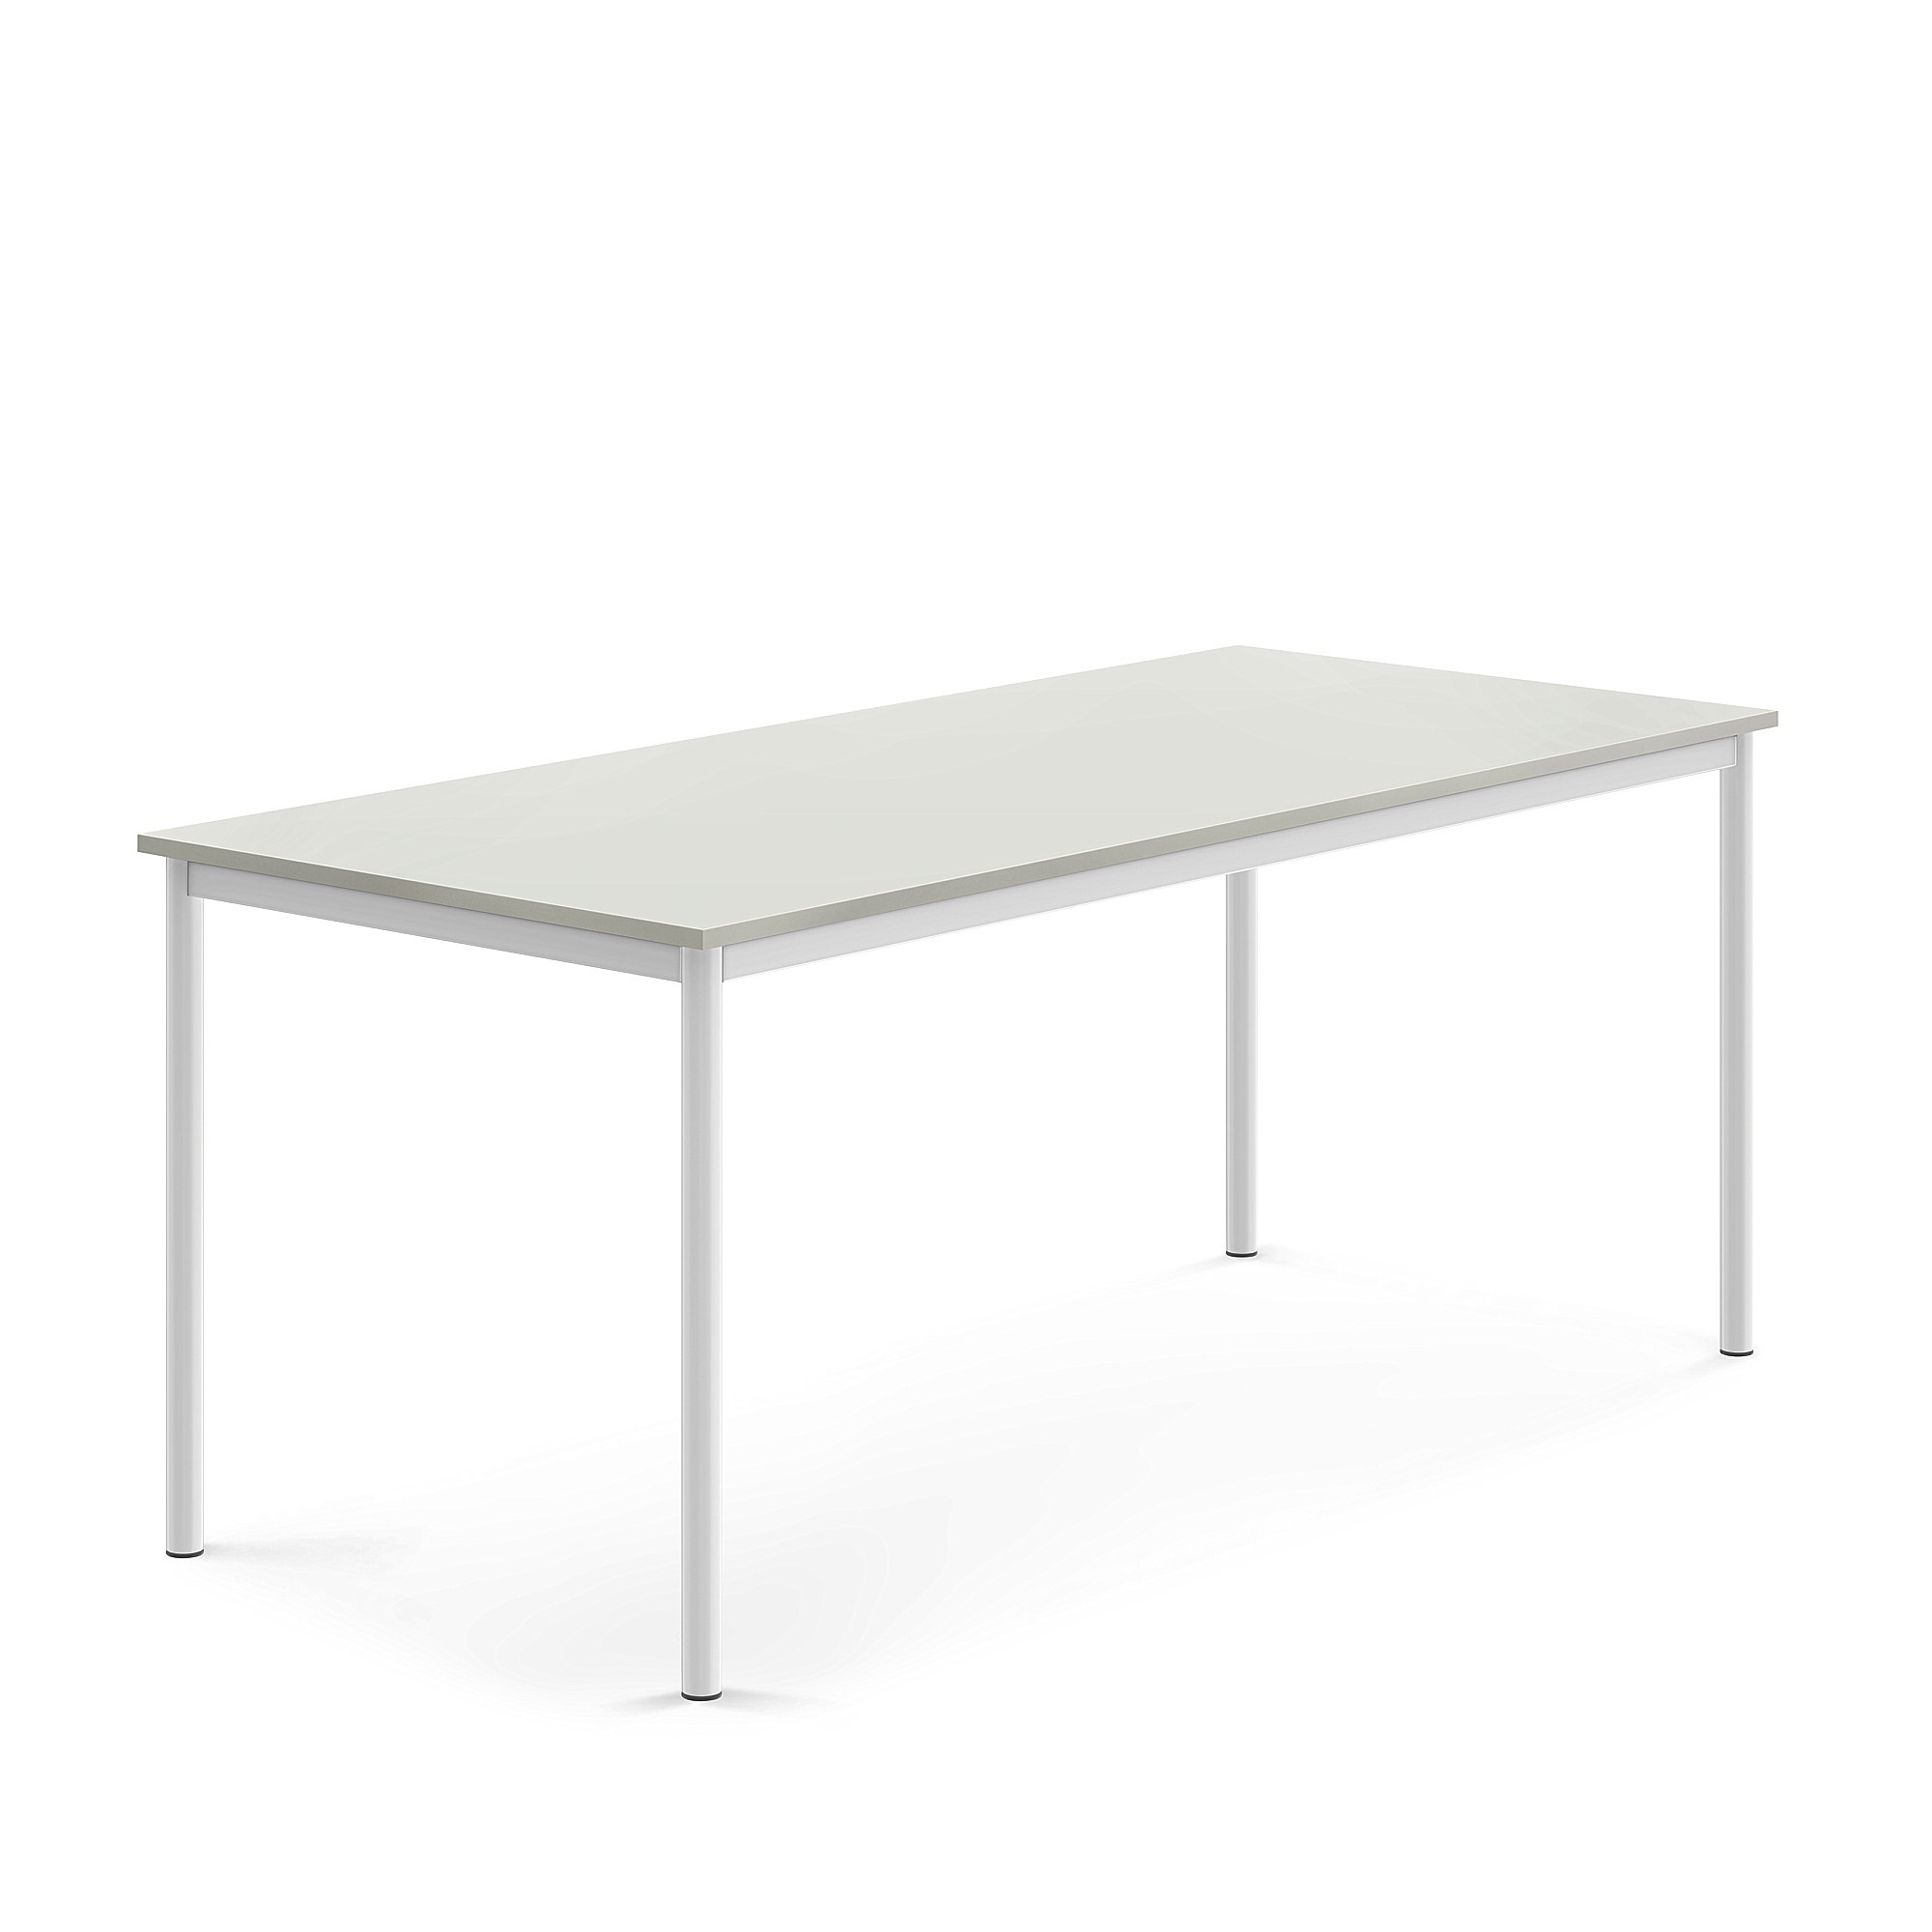 Stůl BORÅS, 1800x800x720 mm, bílé nohy, HPL deska, šedá